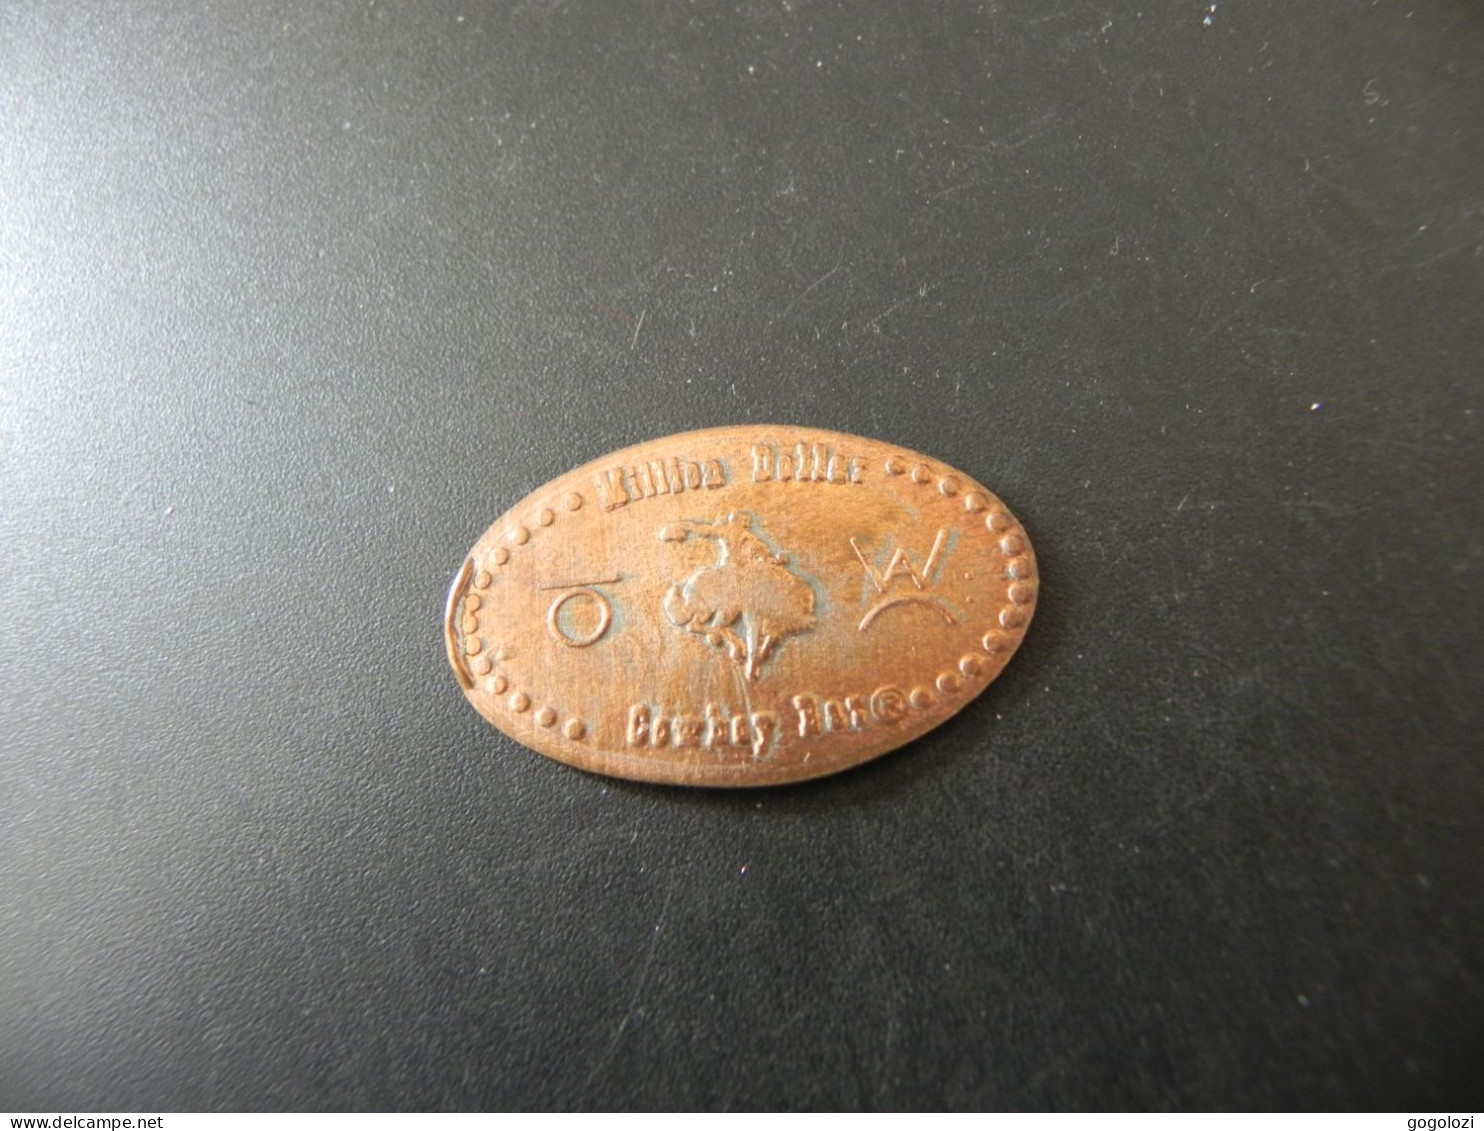 Jeton Token - Elongated Cent - USA - Jackson's Watering Hole Wyoming - Million Dollar Cowboy Bar - Souvenir-Medaille (elongated Coins)